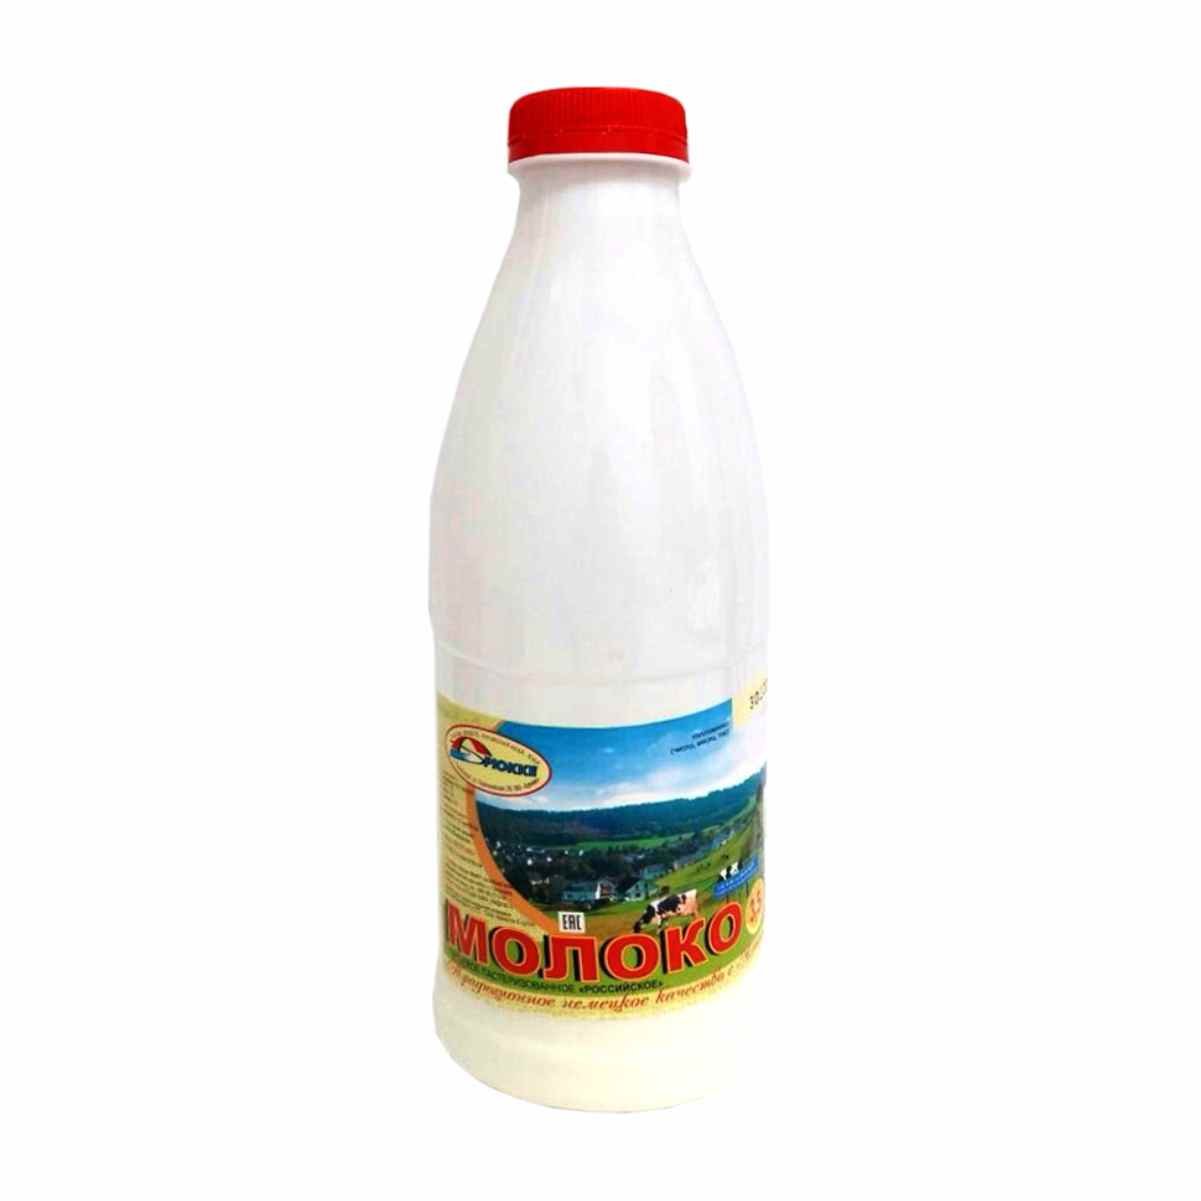 Молоко Брюкке пастериз 3.5% пл/б 900г